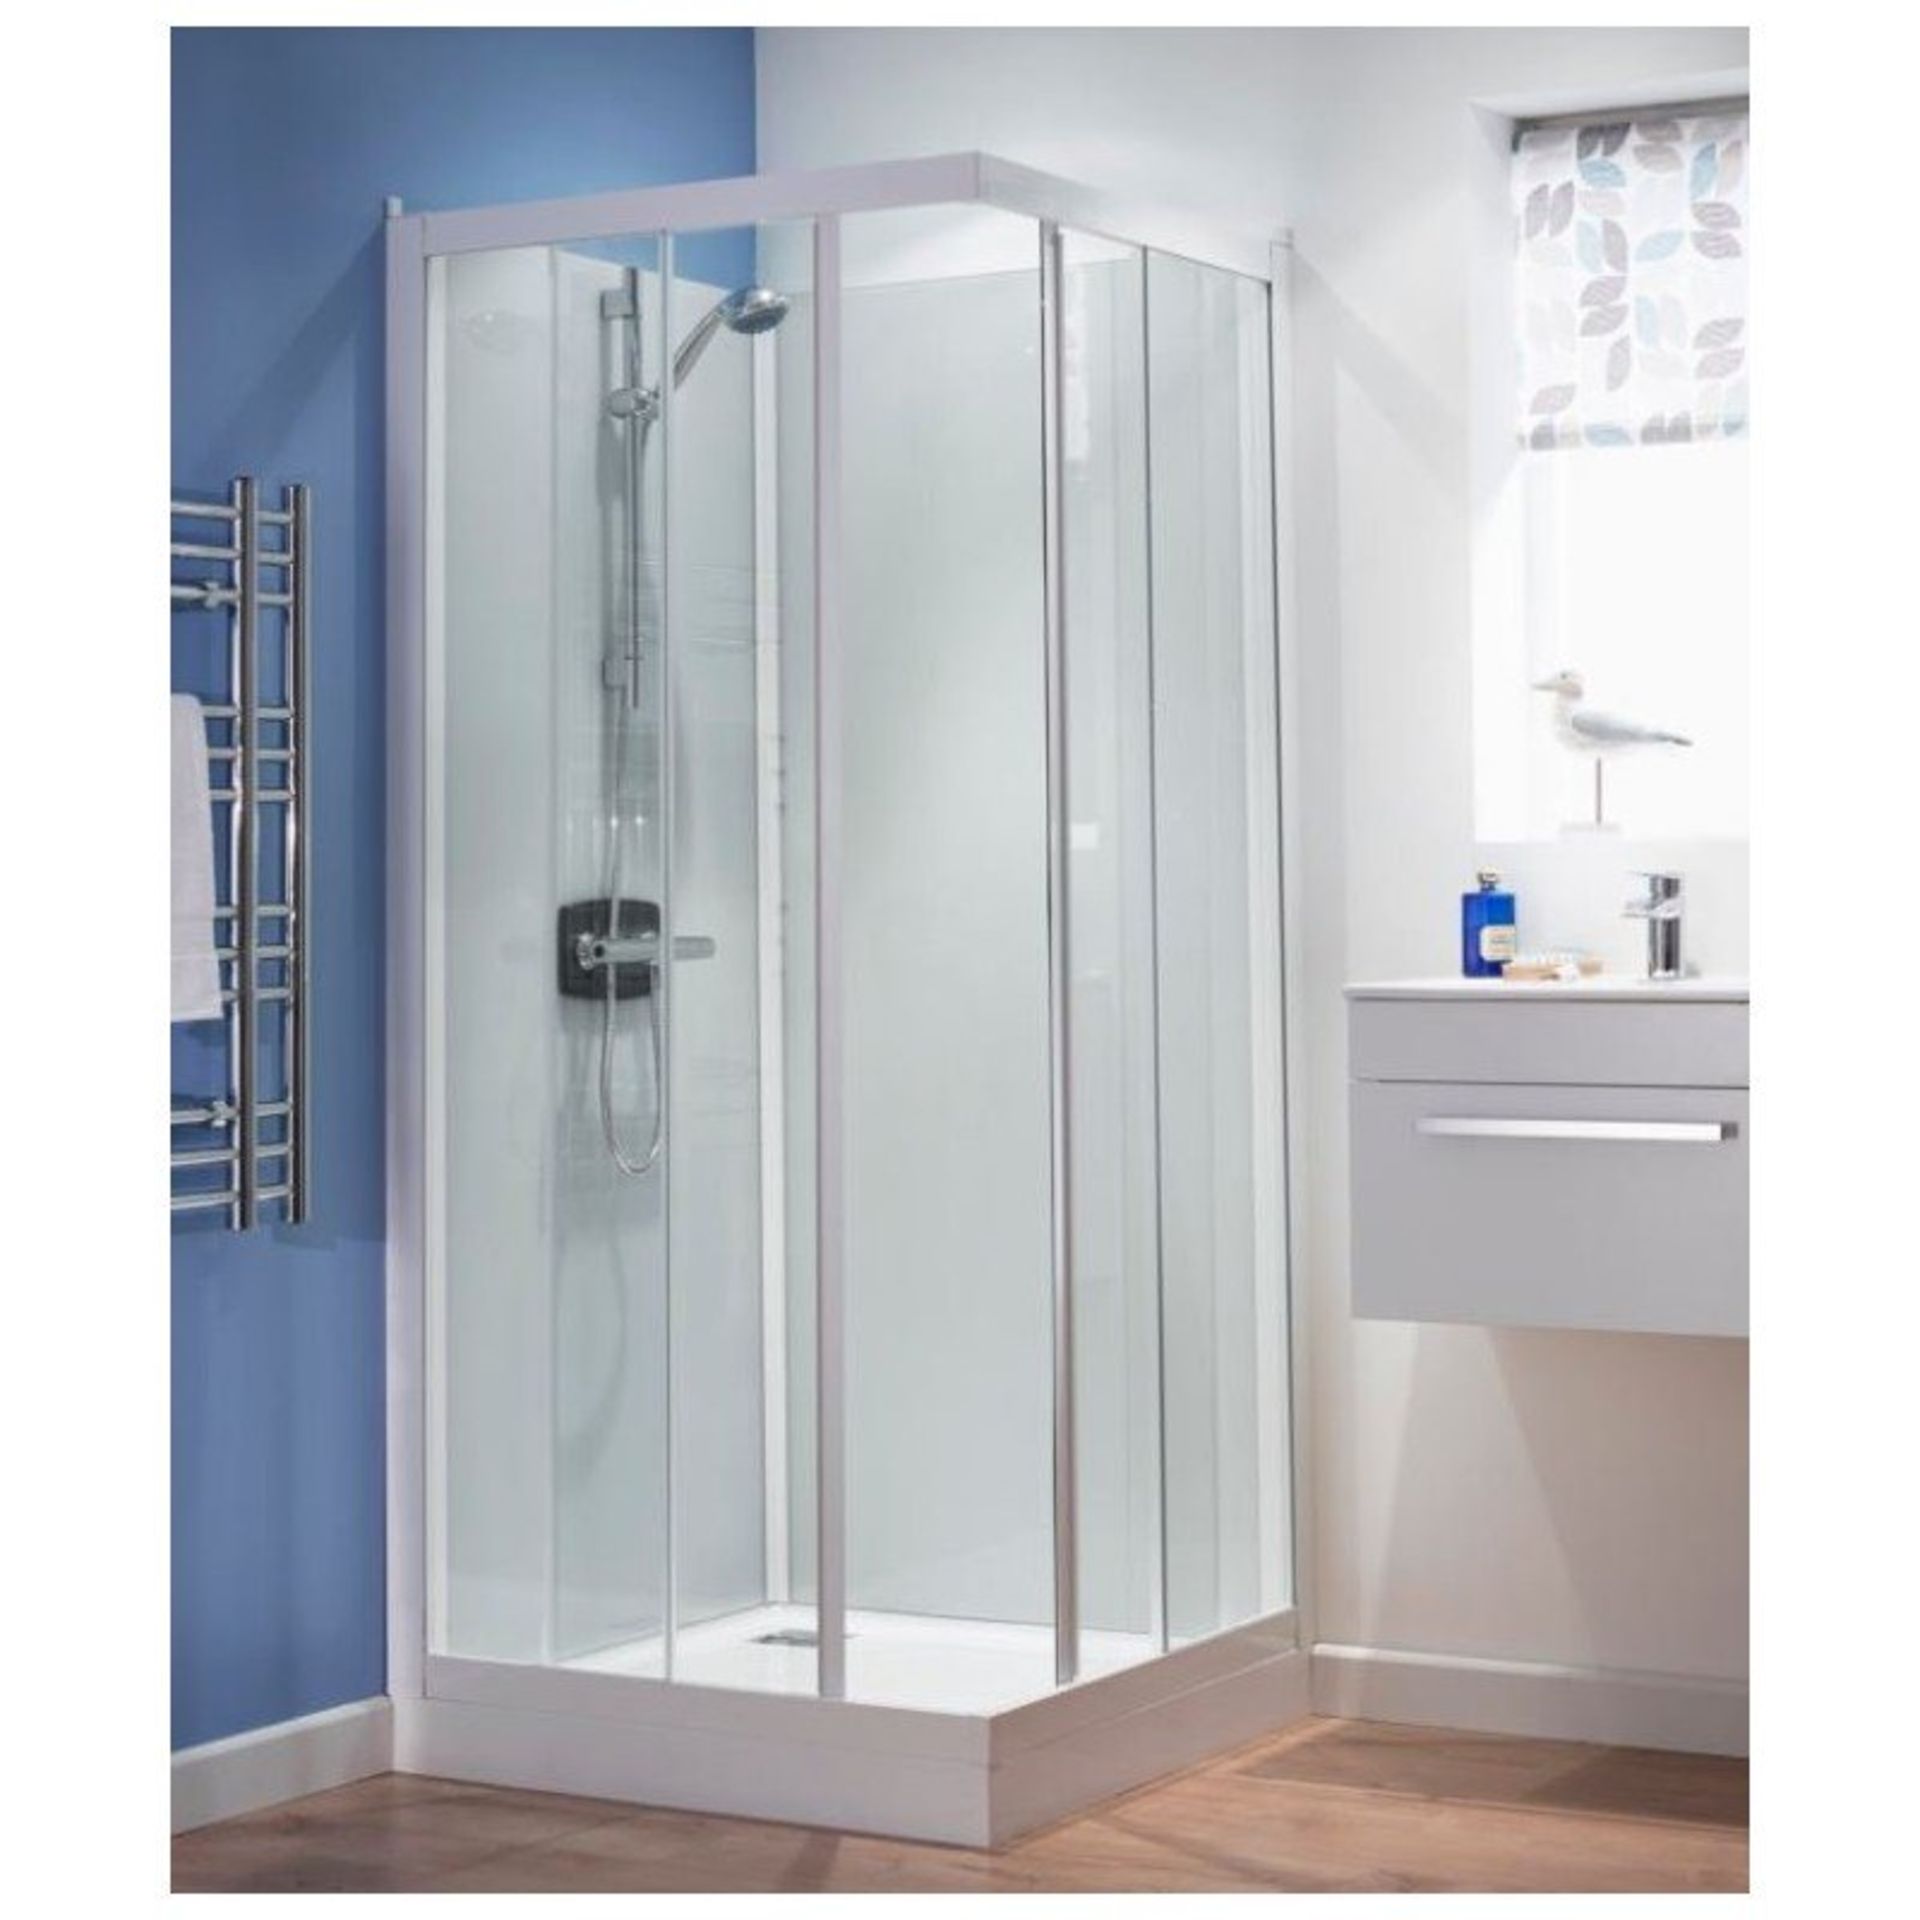 Kineprime 900 x 900 shower enclosure, new.